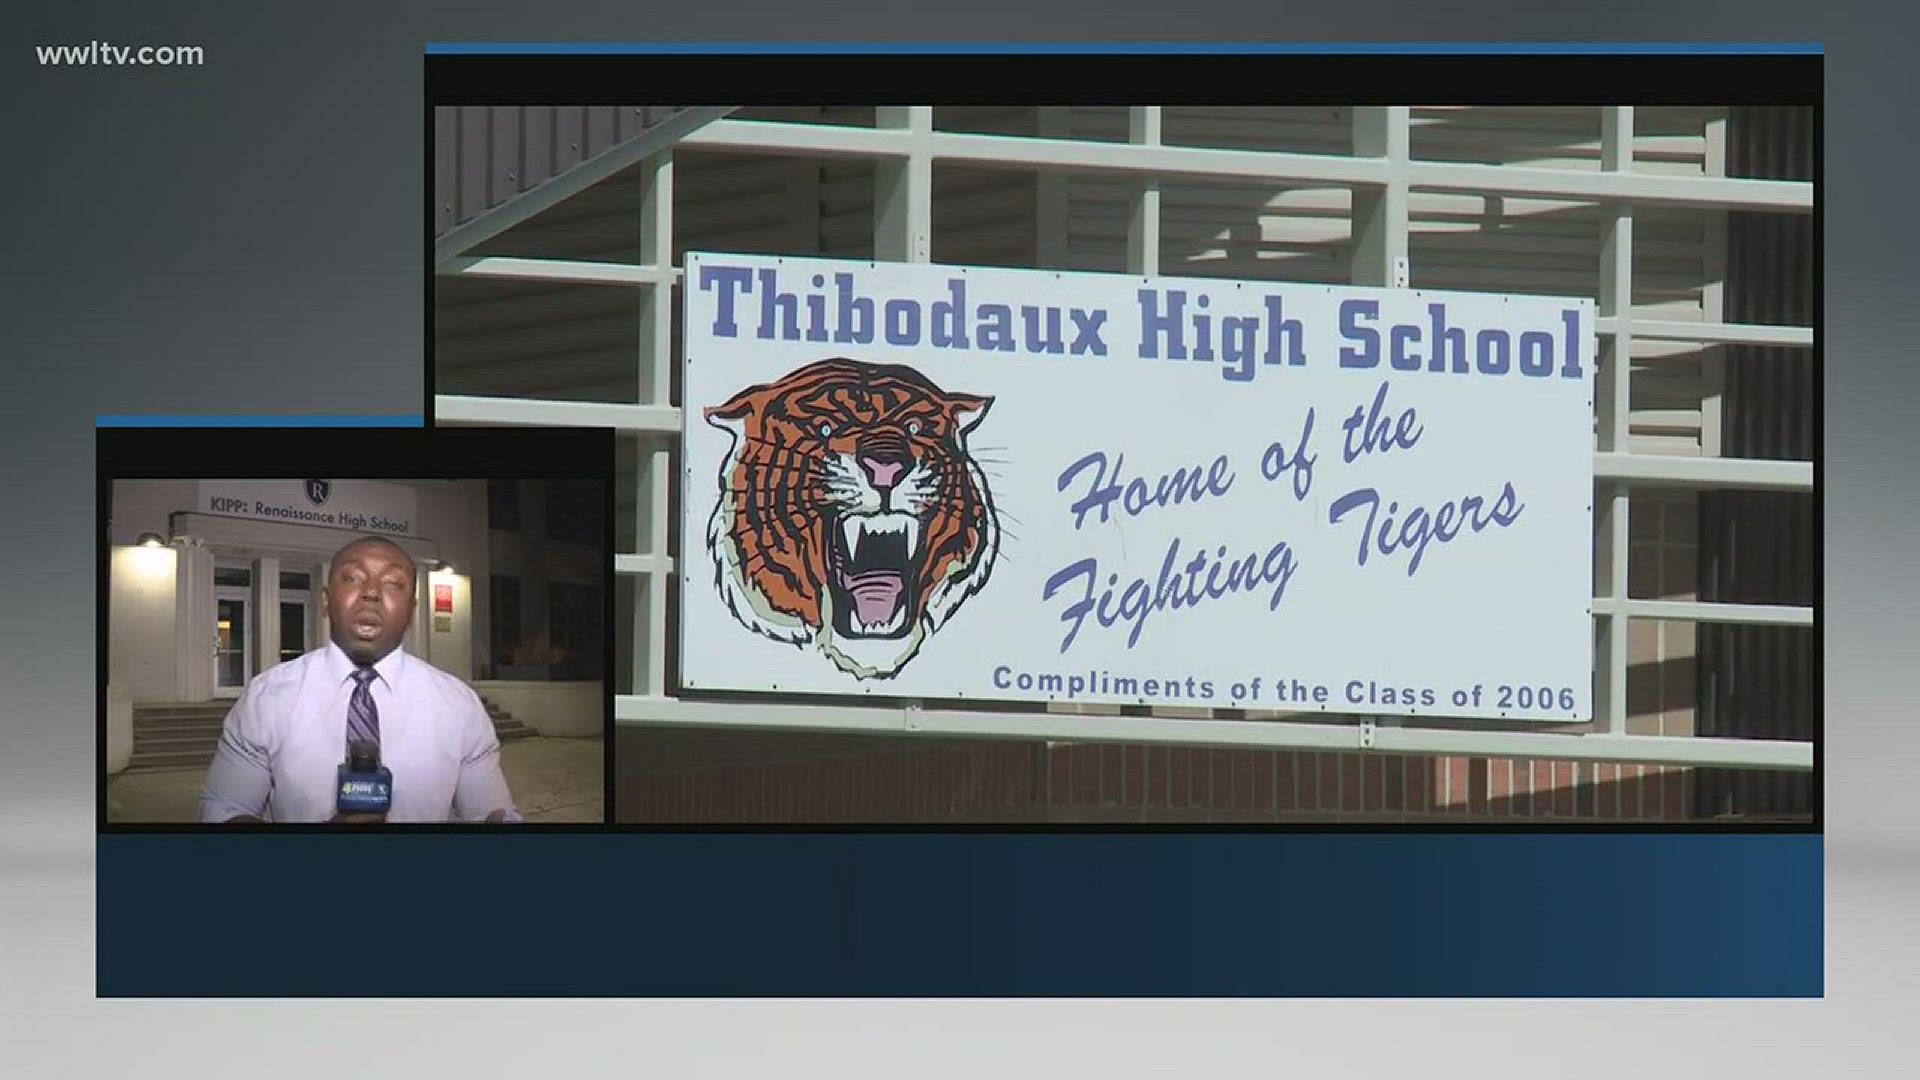 Authorities ID Thibodaux High student accused of threats